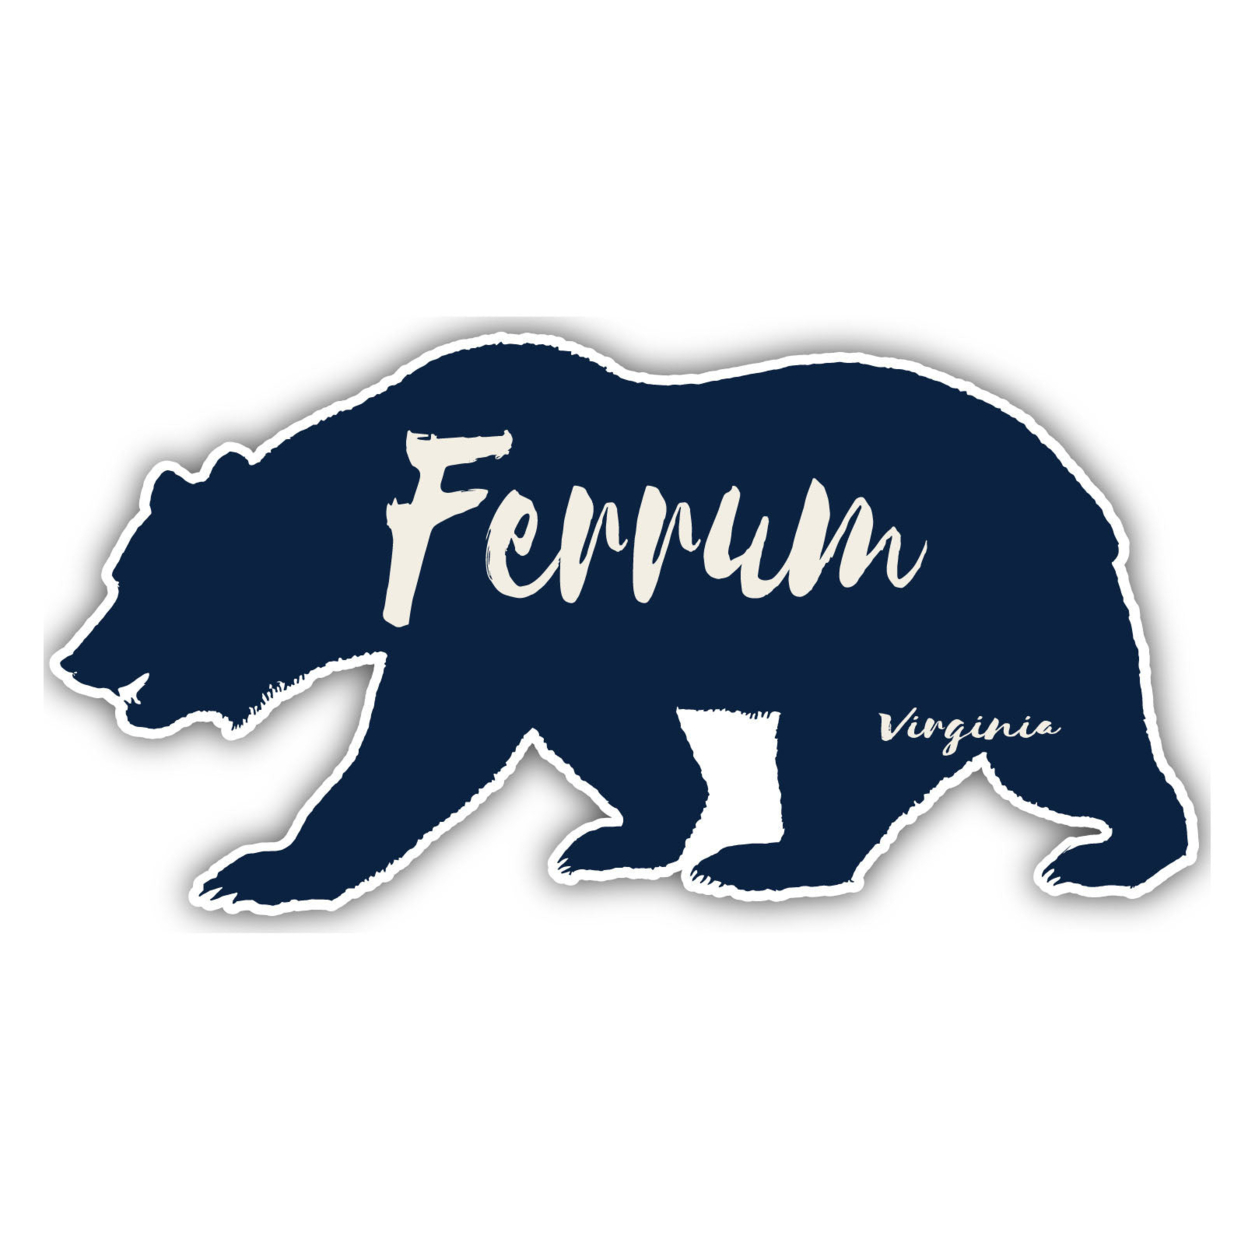 Ferrum Virginia Souvenir Decorative Stickers (Choose Theme And Size) - Single Unit, 2-Inch, Bear